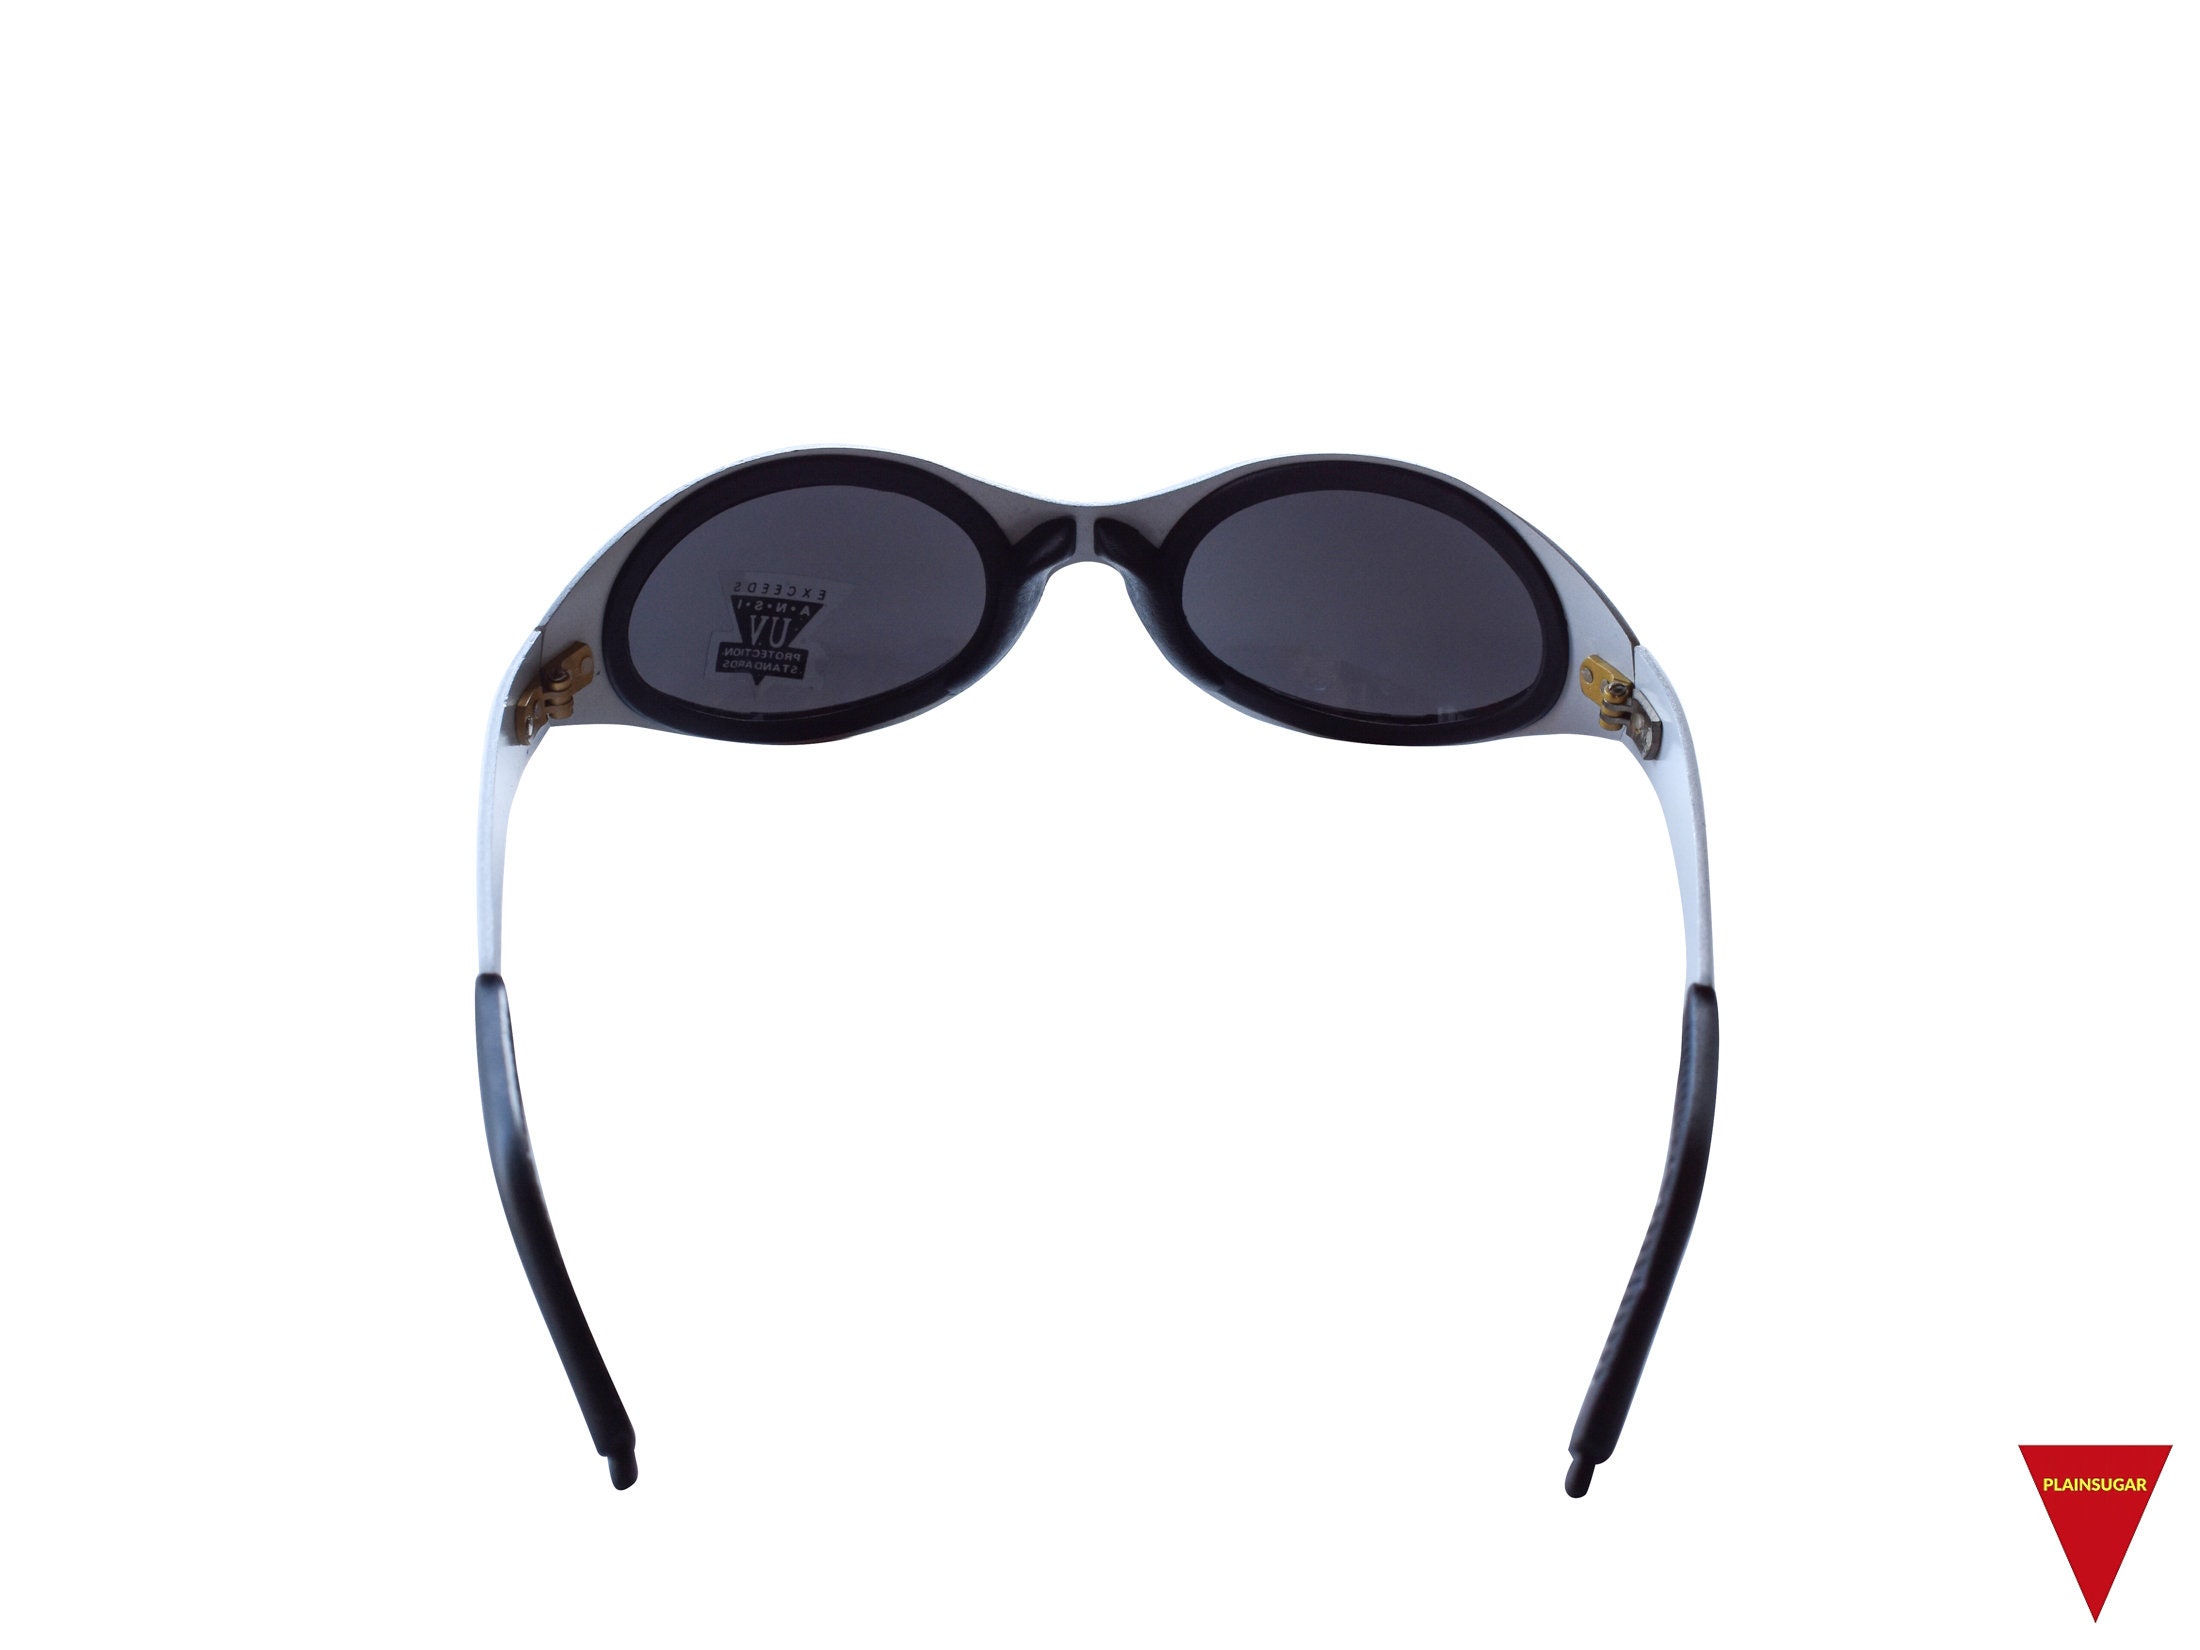 Rare 80's Wraparound Sunglasses, Biker Sunglasses, Silver Metal Frame, with Mirrored Lenses Original Unworn Vintage